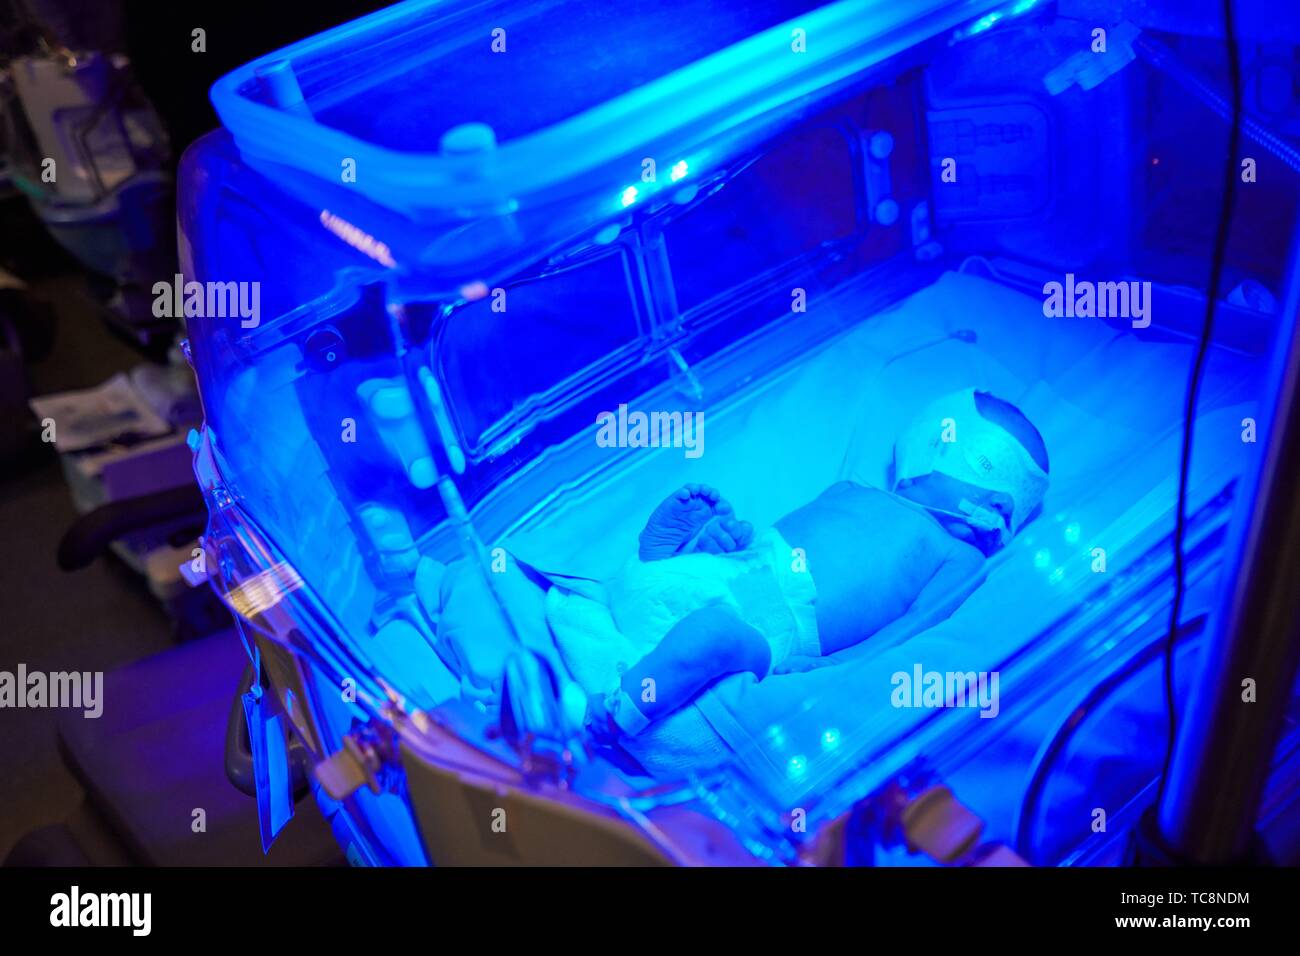 Baby im Inkubator, Fototherapie, Neonatologie Pädiatrie, Medizinische Versorgung, Neugeborene, Intensivstation, UVI, Intensivstation, Krankenhaus Donostia, San Sebastian, Stockfoto